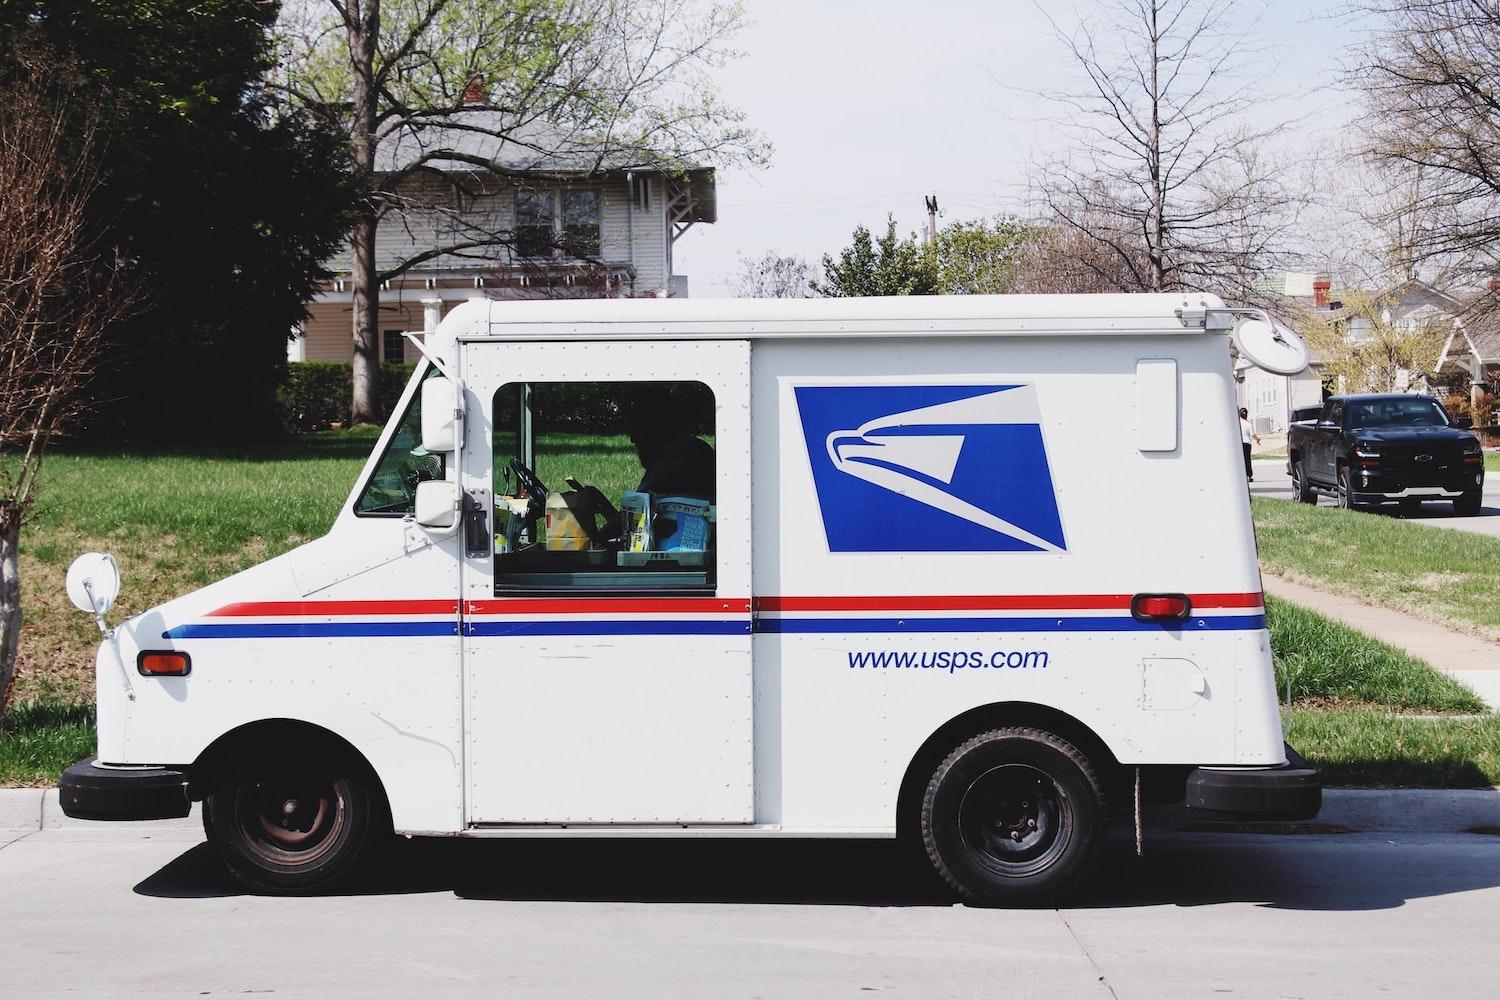 USPS US Postal Service delivery truck fleet electrification